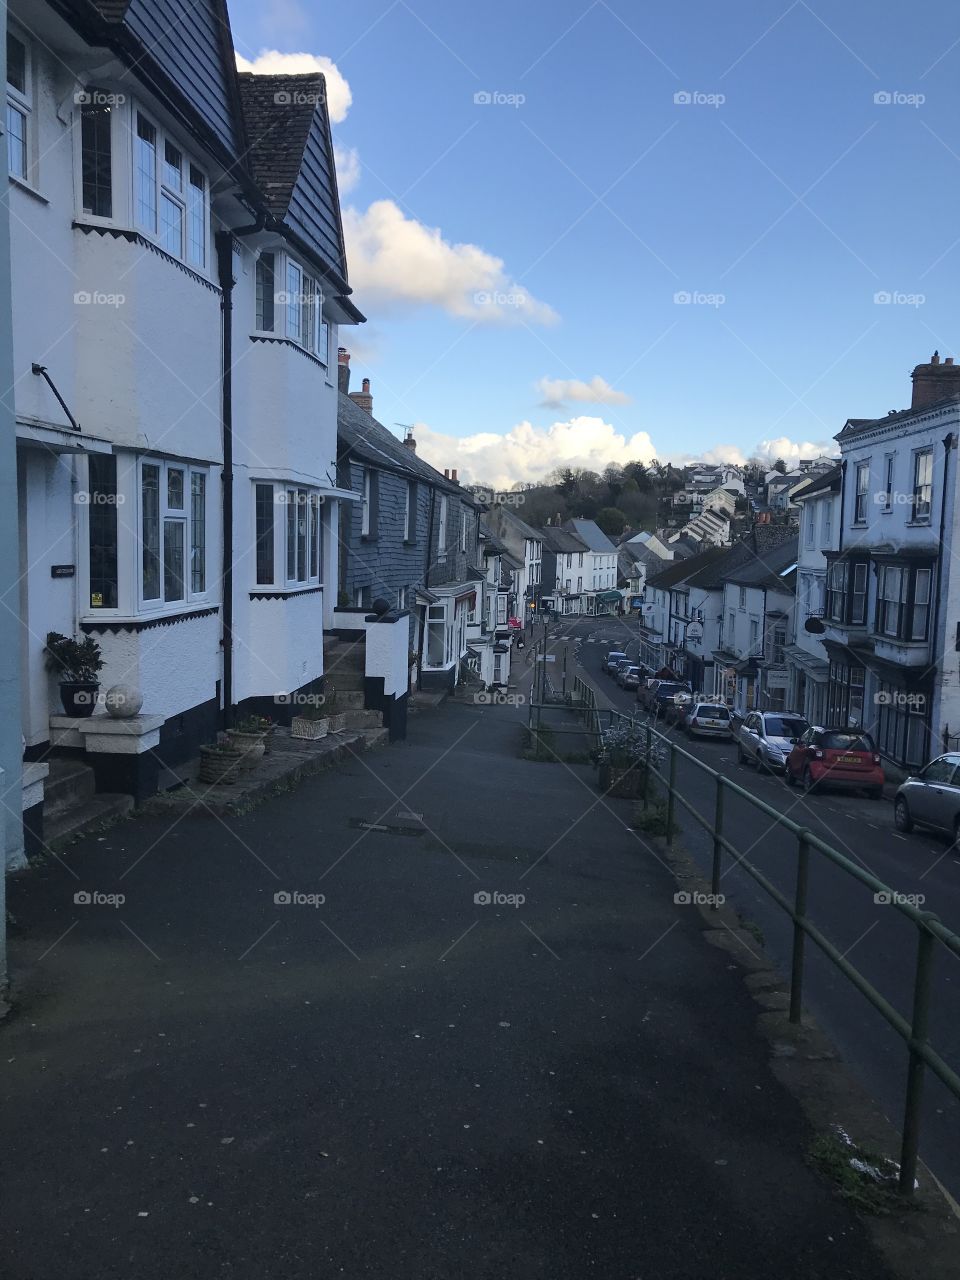 The town of Modbury, Devon, in late afternoon winter sunshine.